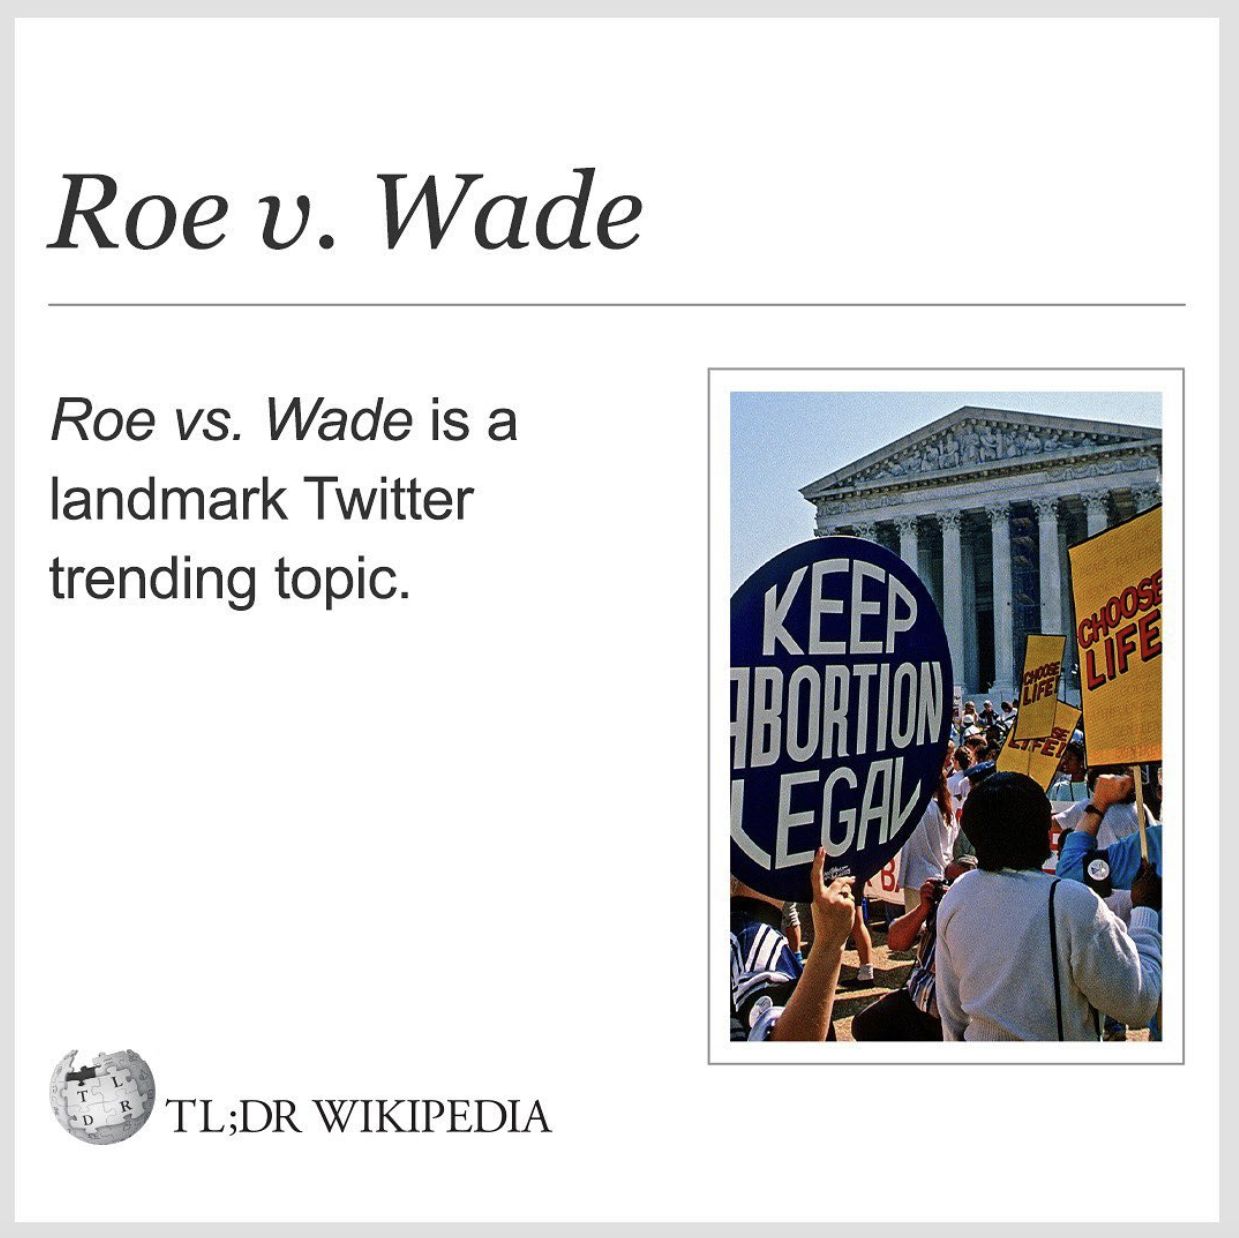 Wikipedia Memes - roe v wade date - Roe v. Wade Roe vs. Wade is a landmark Twitter trending topic. Keep Bortion lowong Life Lega Tl;Dr Wikipedia